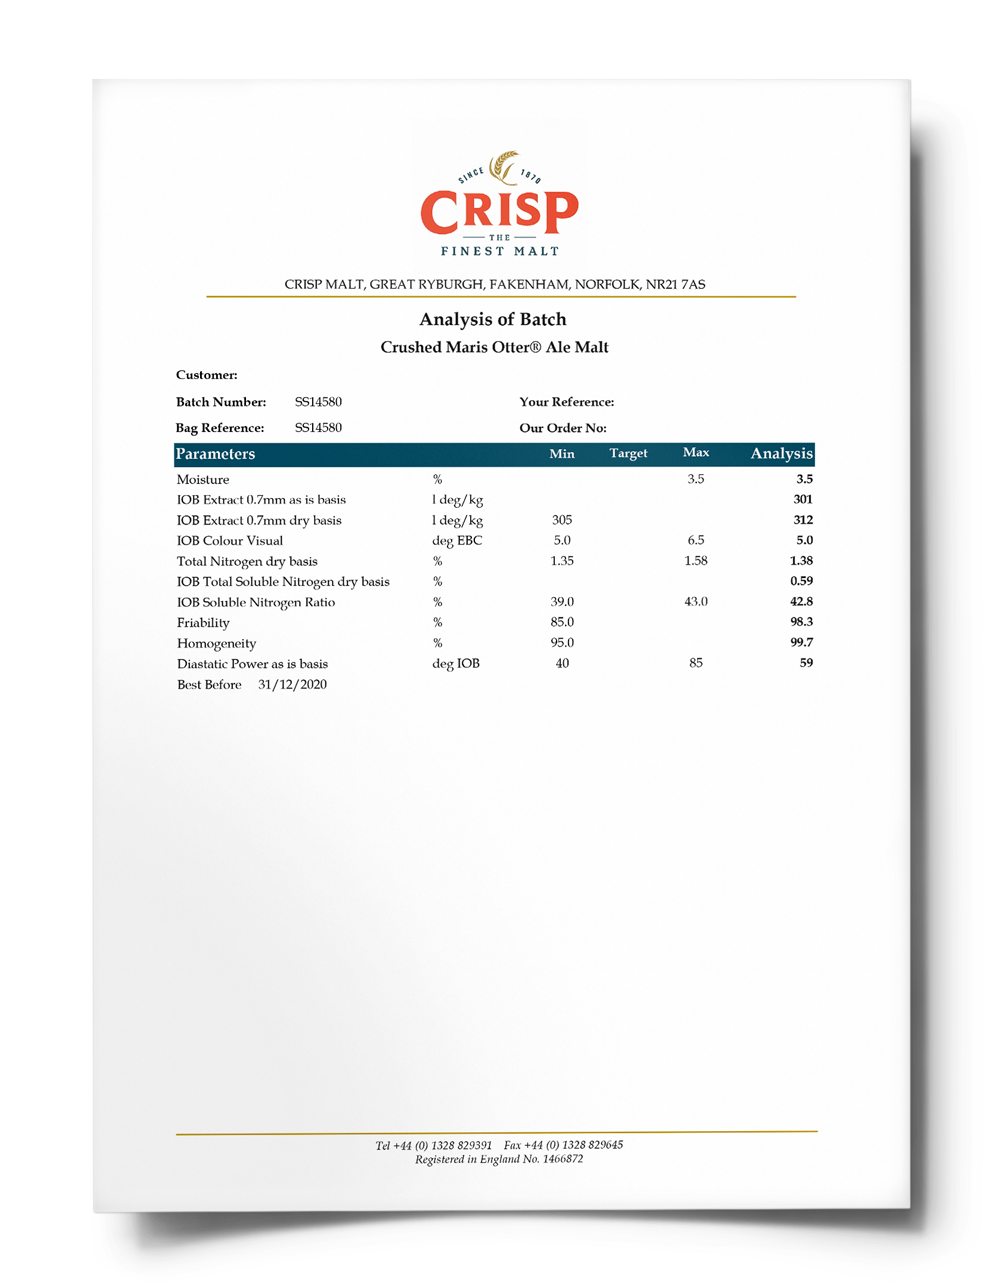 Crisp Malt Certificate of Analysis